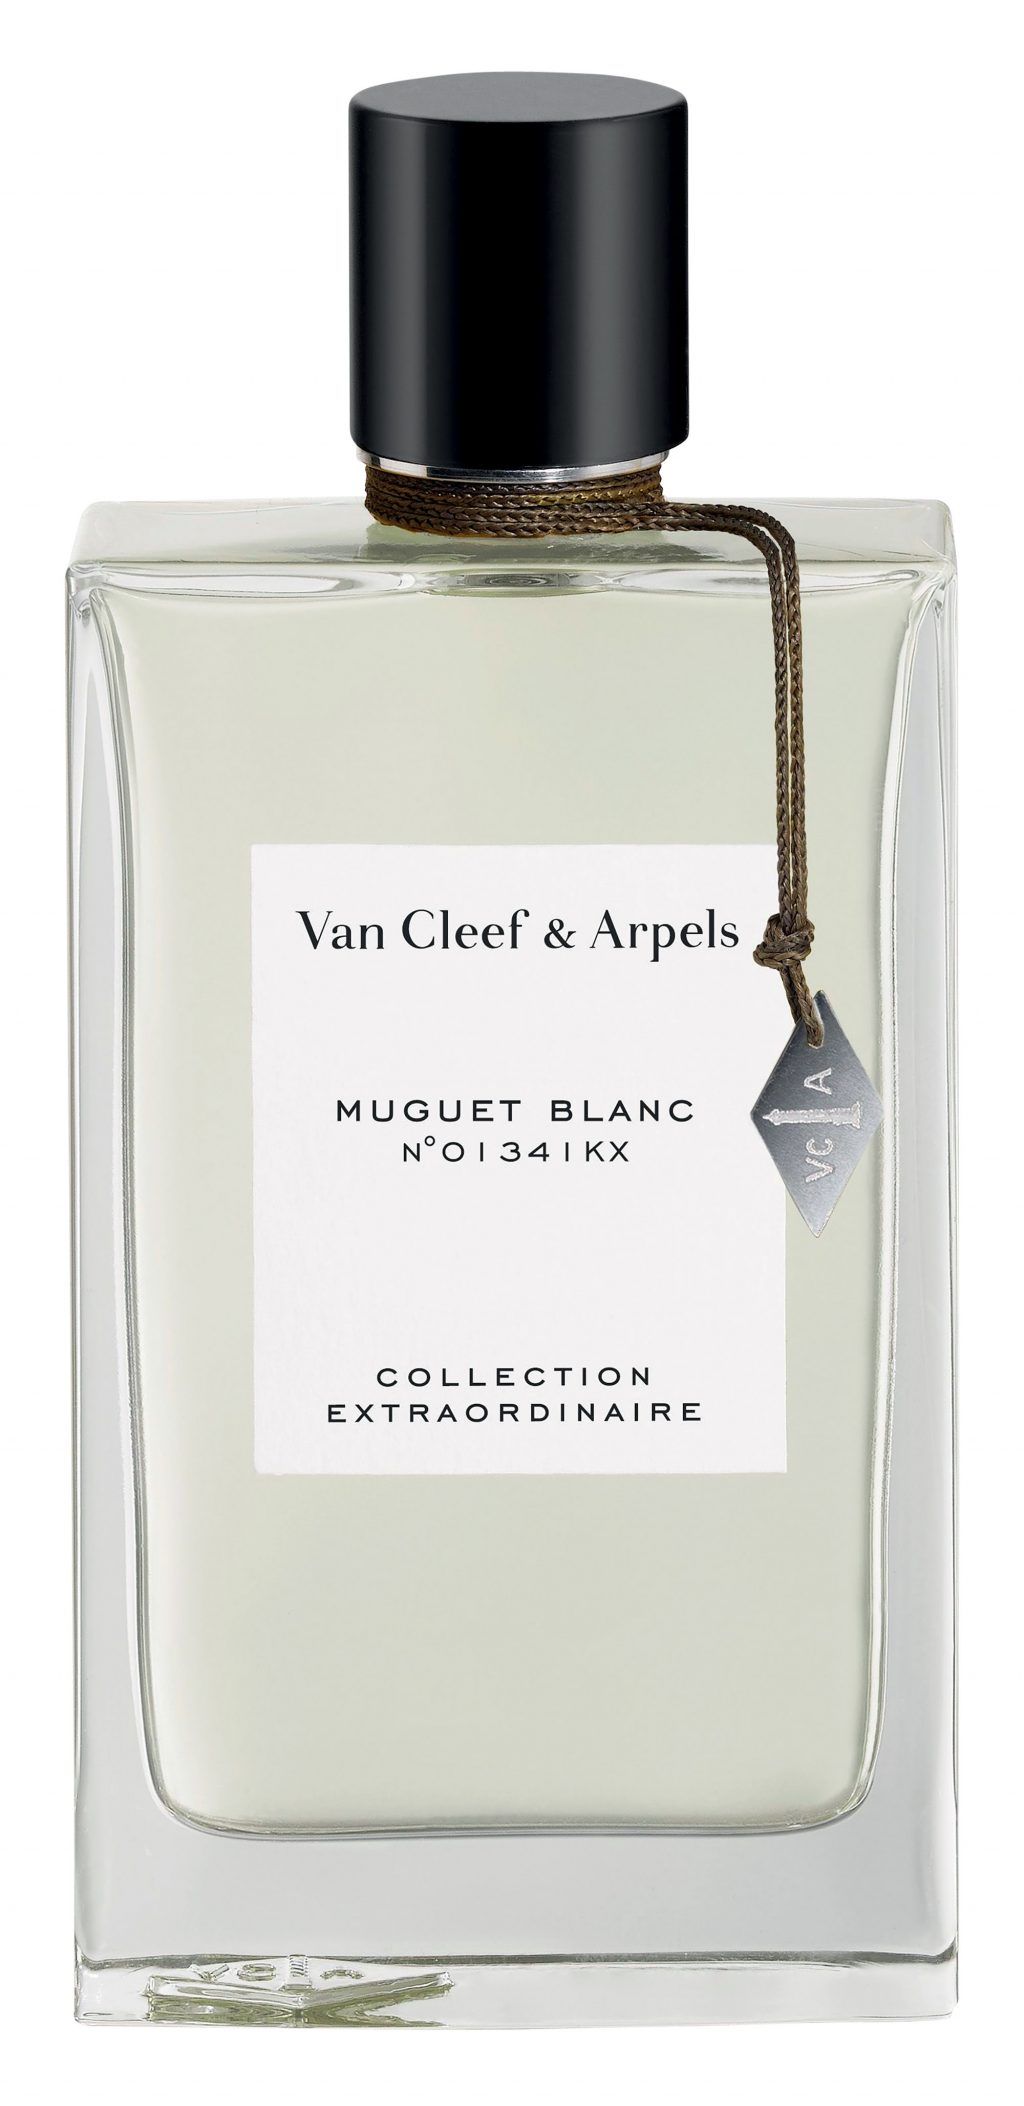 mùi hương của Van Cleef